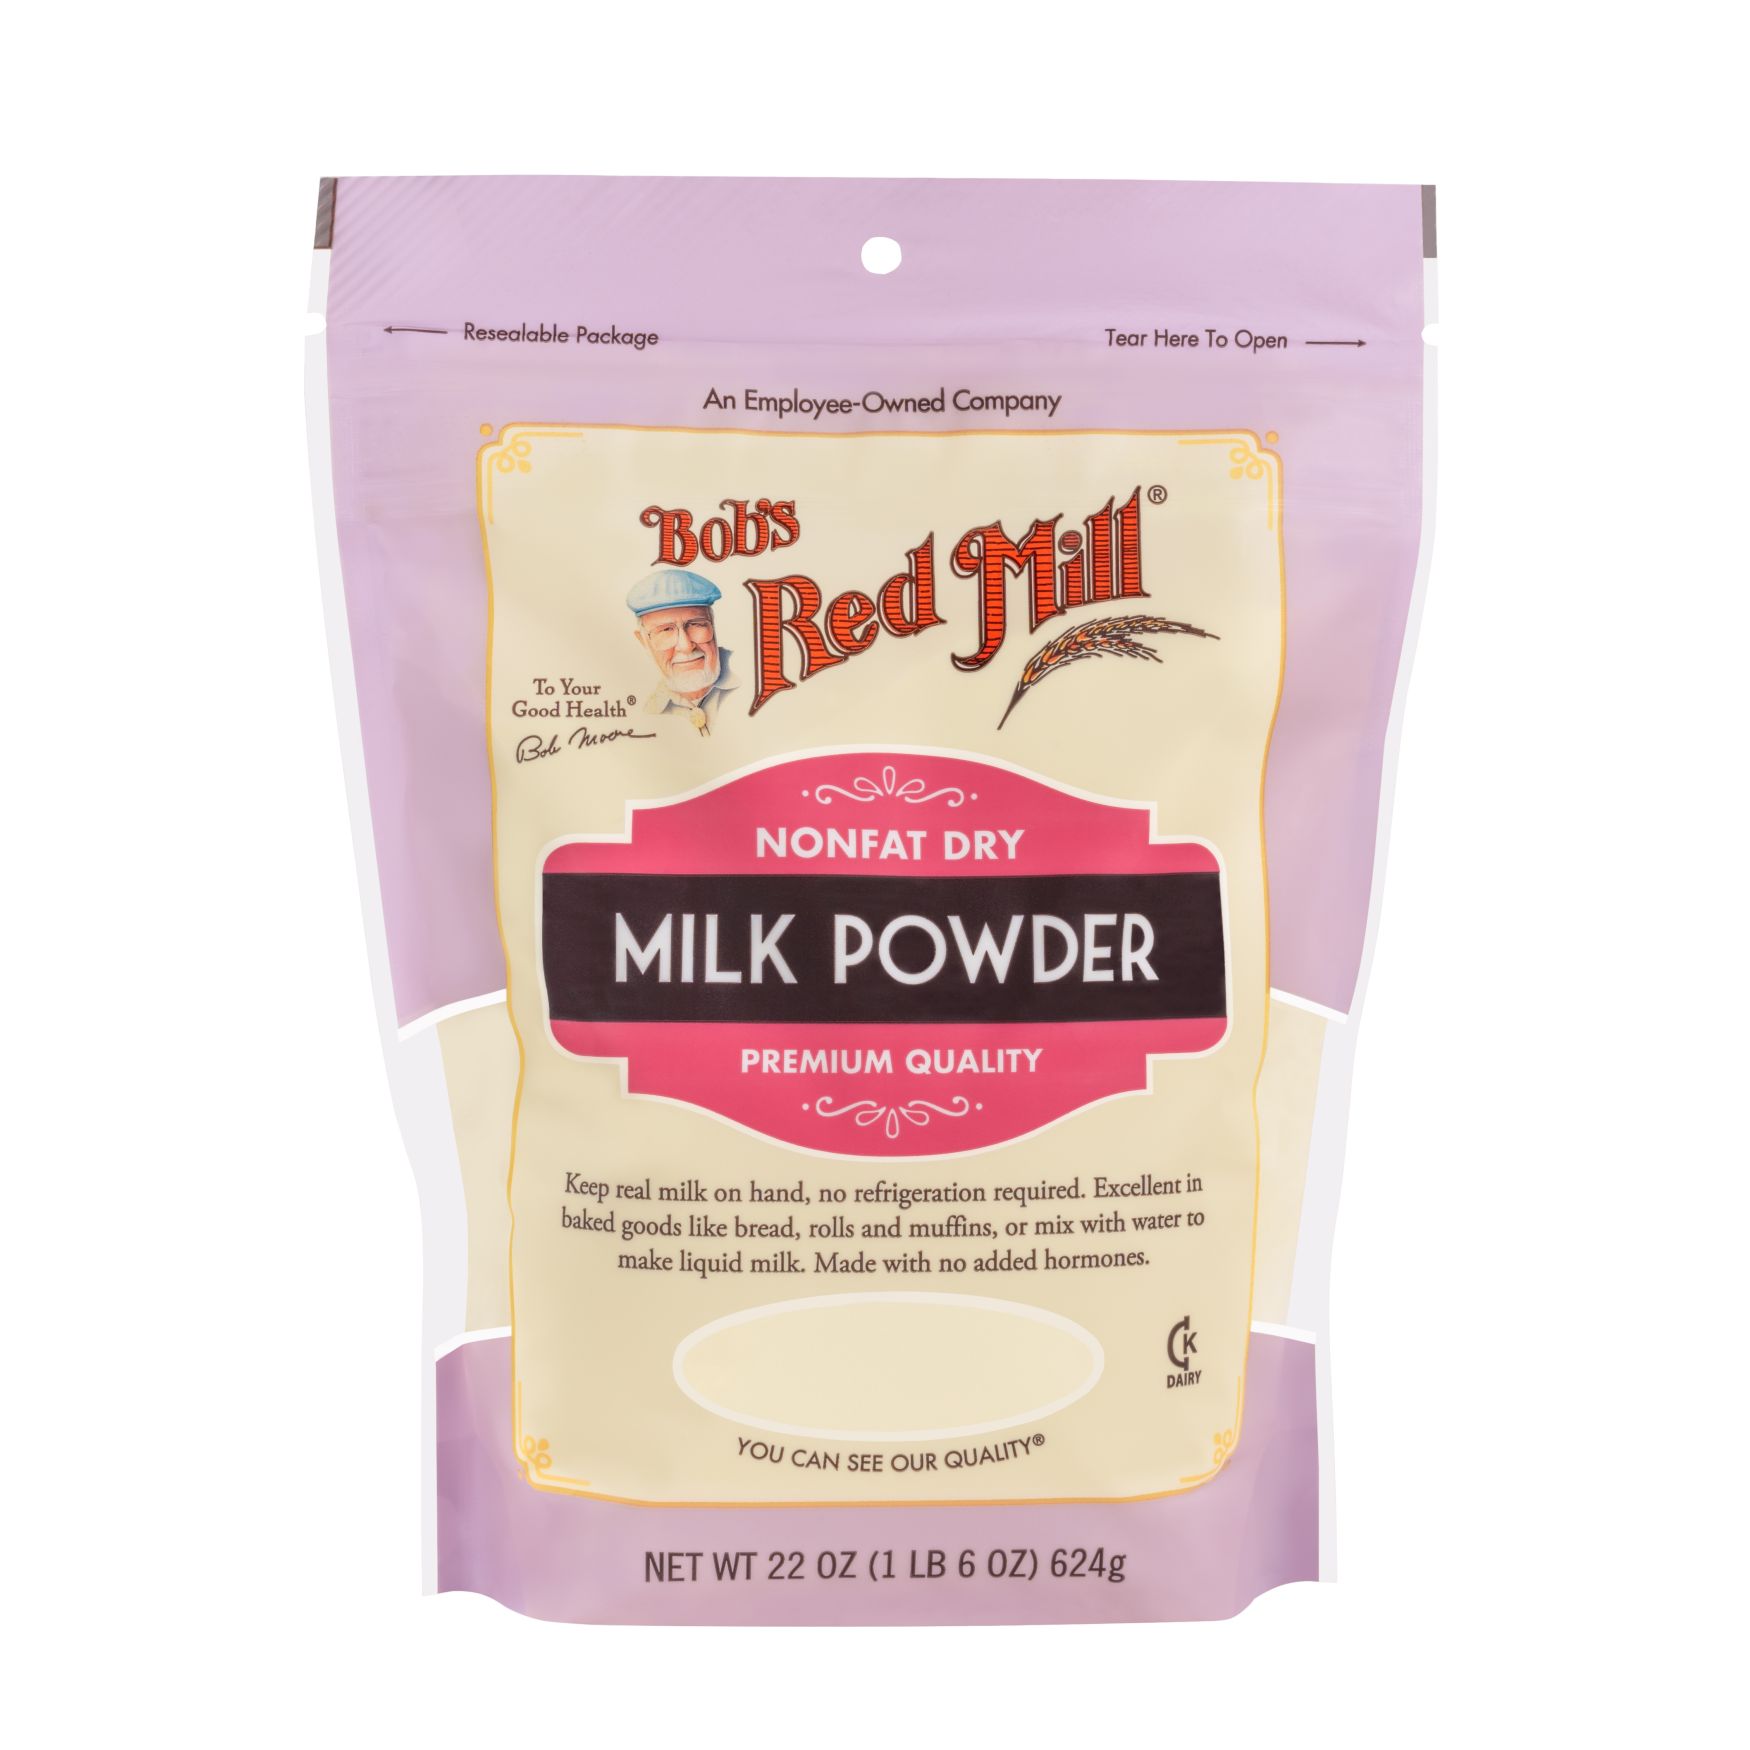 Lactose Free Skim Milk Powder